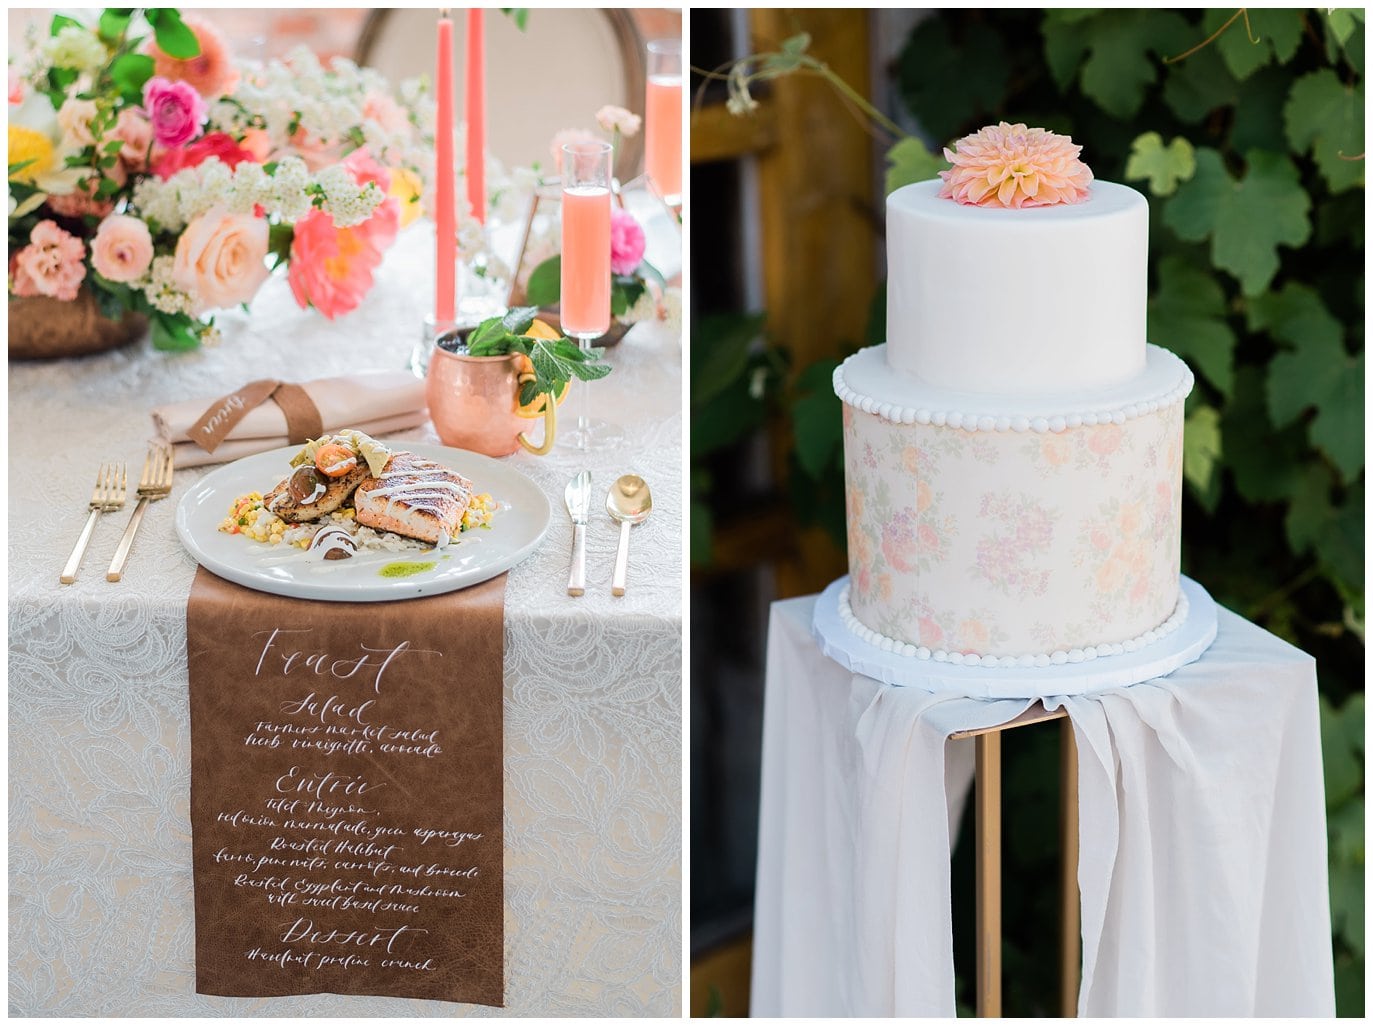 custom watercolor wedding cake at summer blanc wedding by Boulder wedding photographer Jennie Crate photographer